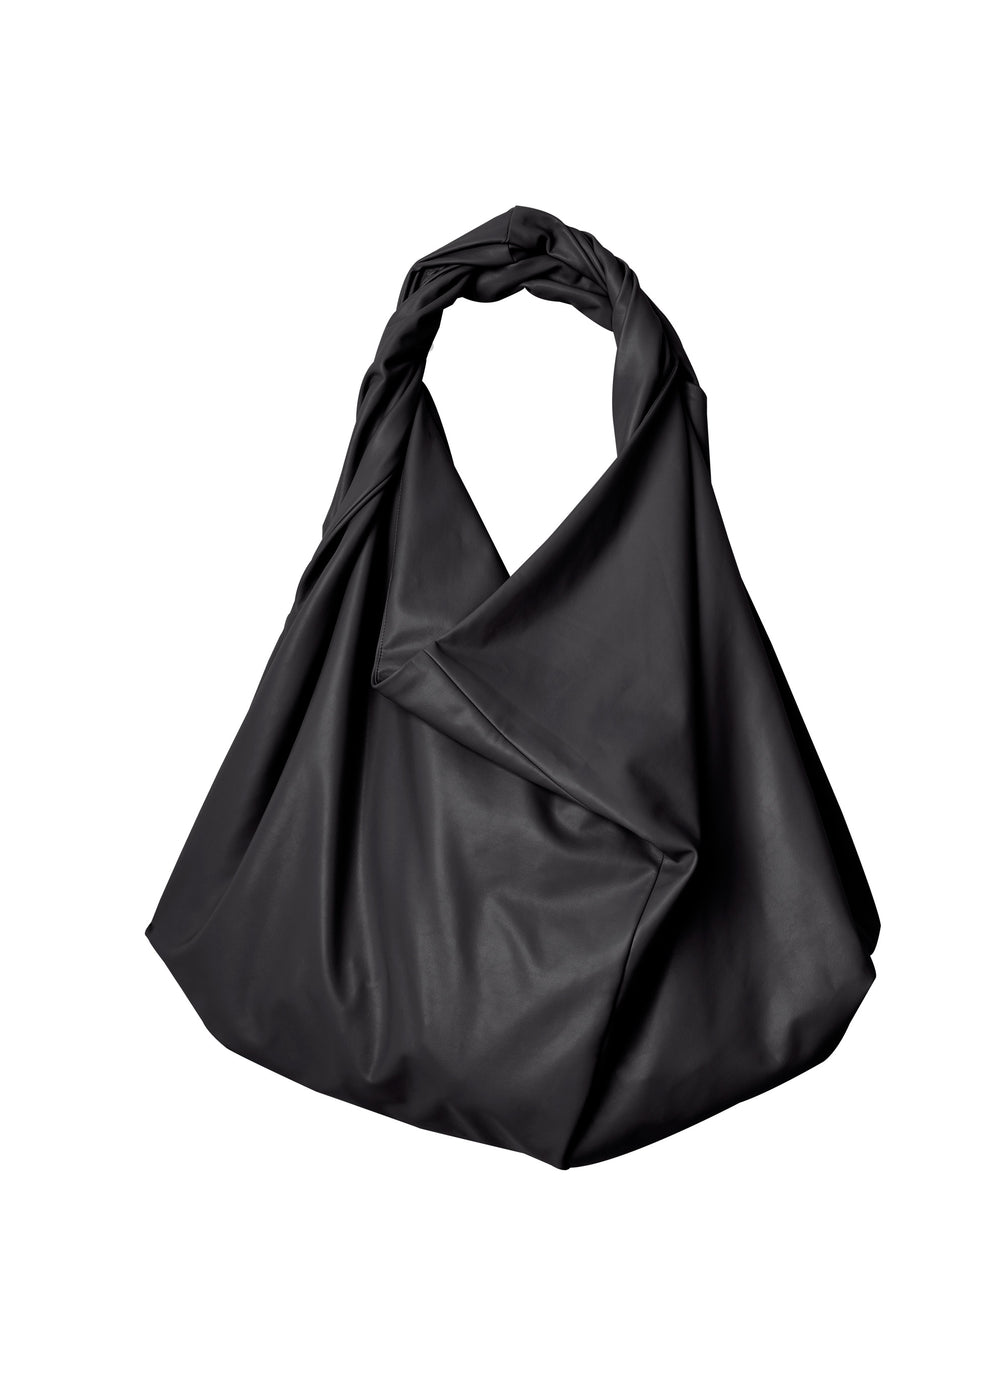 flat lay view of black vegan leather medium length top handle bag with medium sized rectangular base